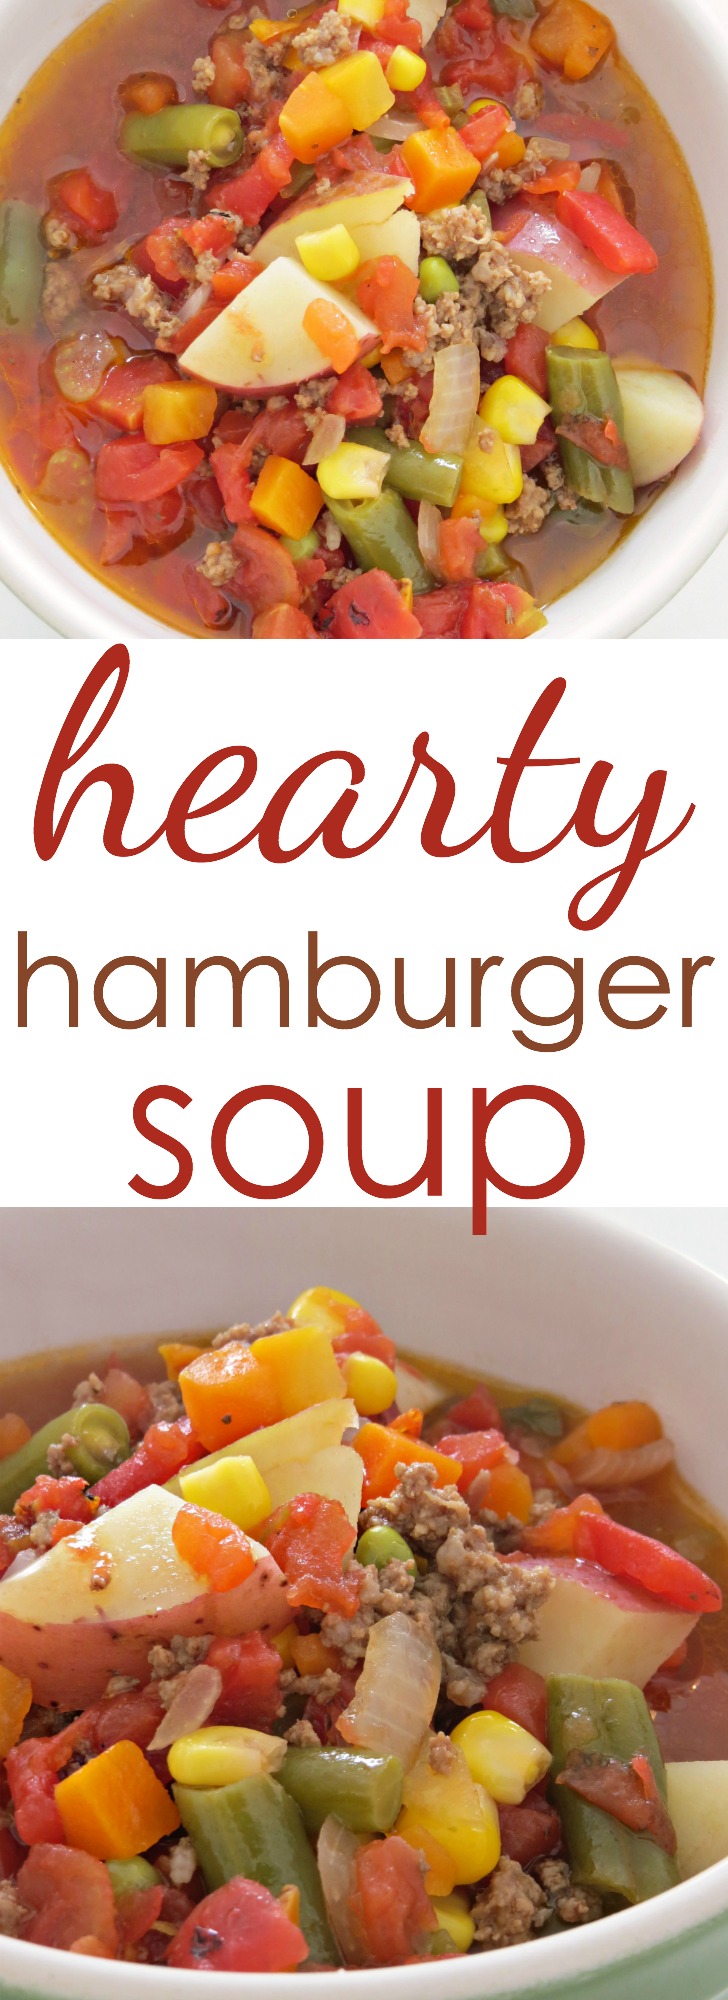 easy hamburger soup recipe